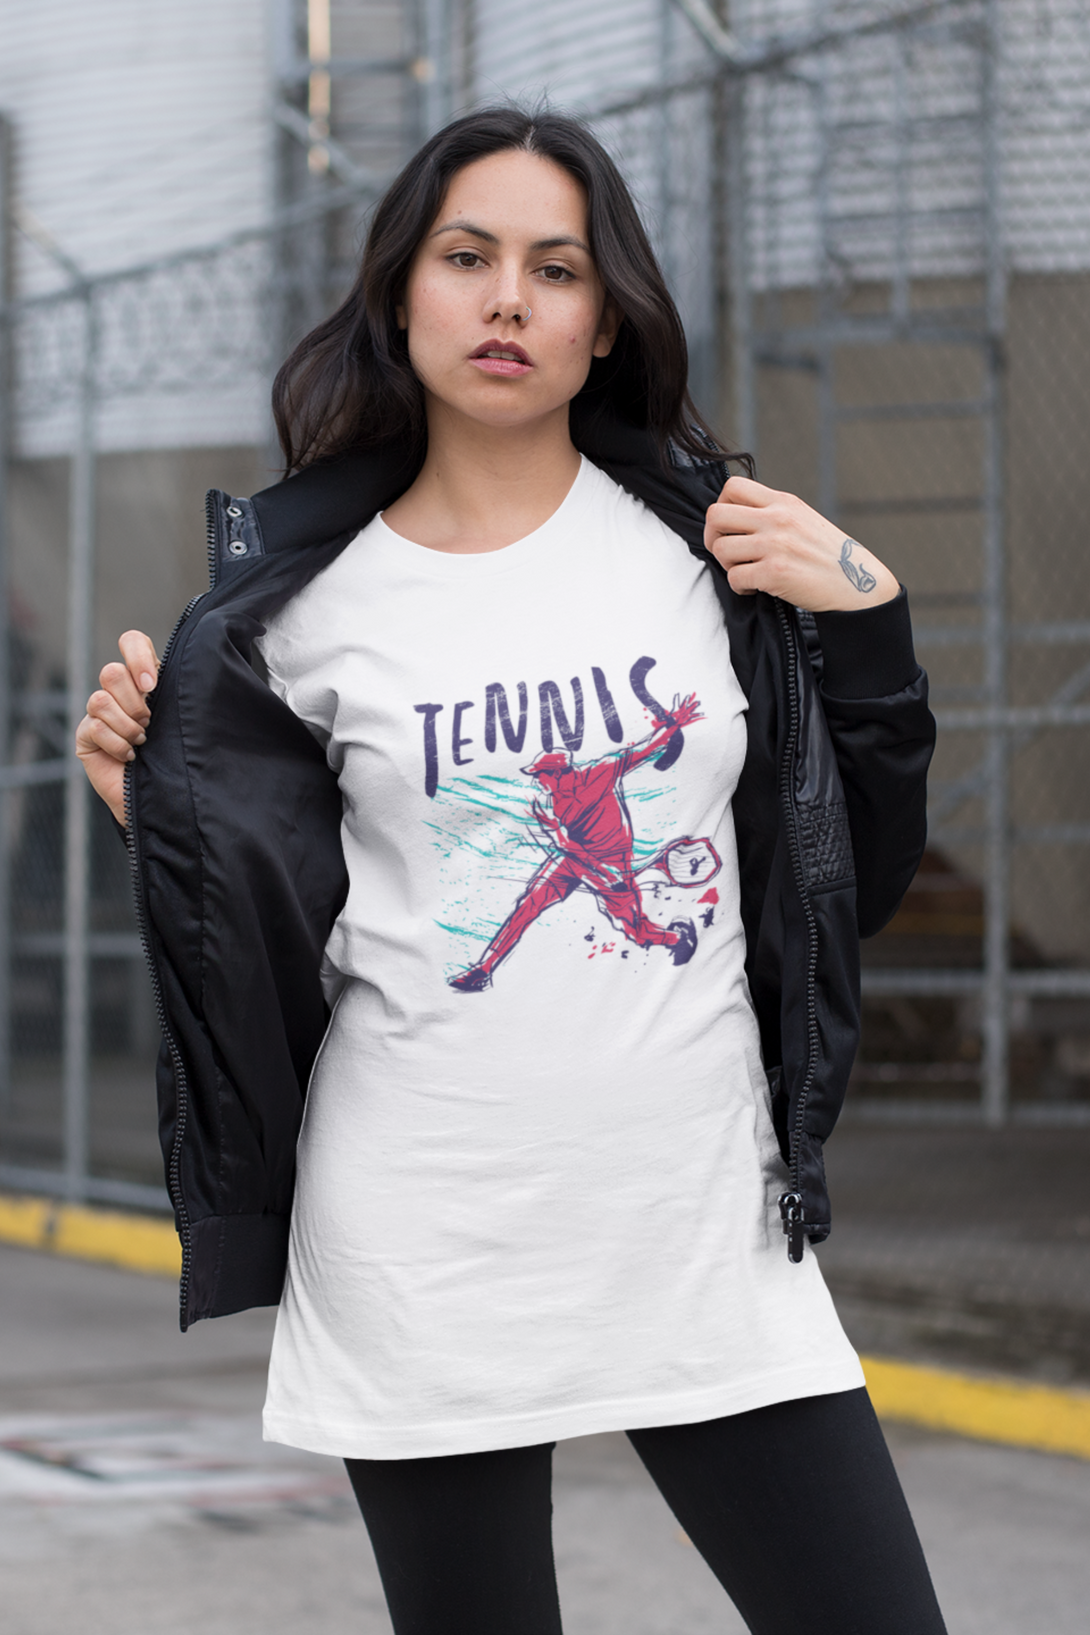 Tennis Printed Oversized T-Shirt For Women - WowWaves - 2